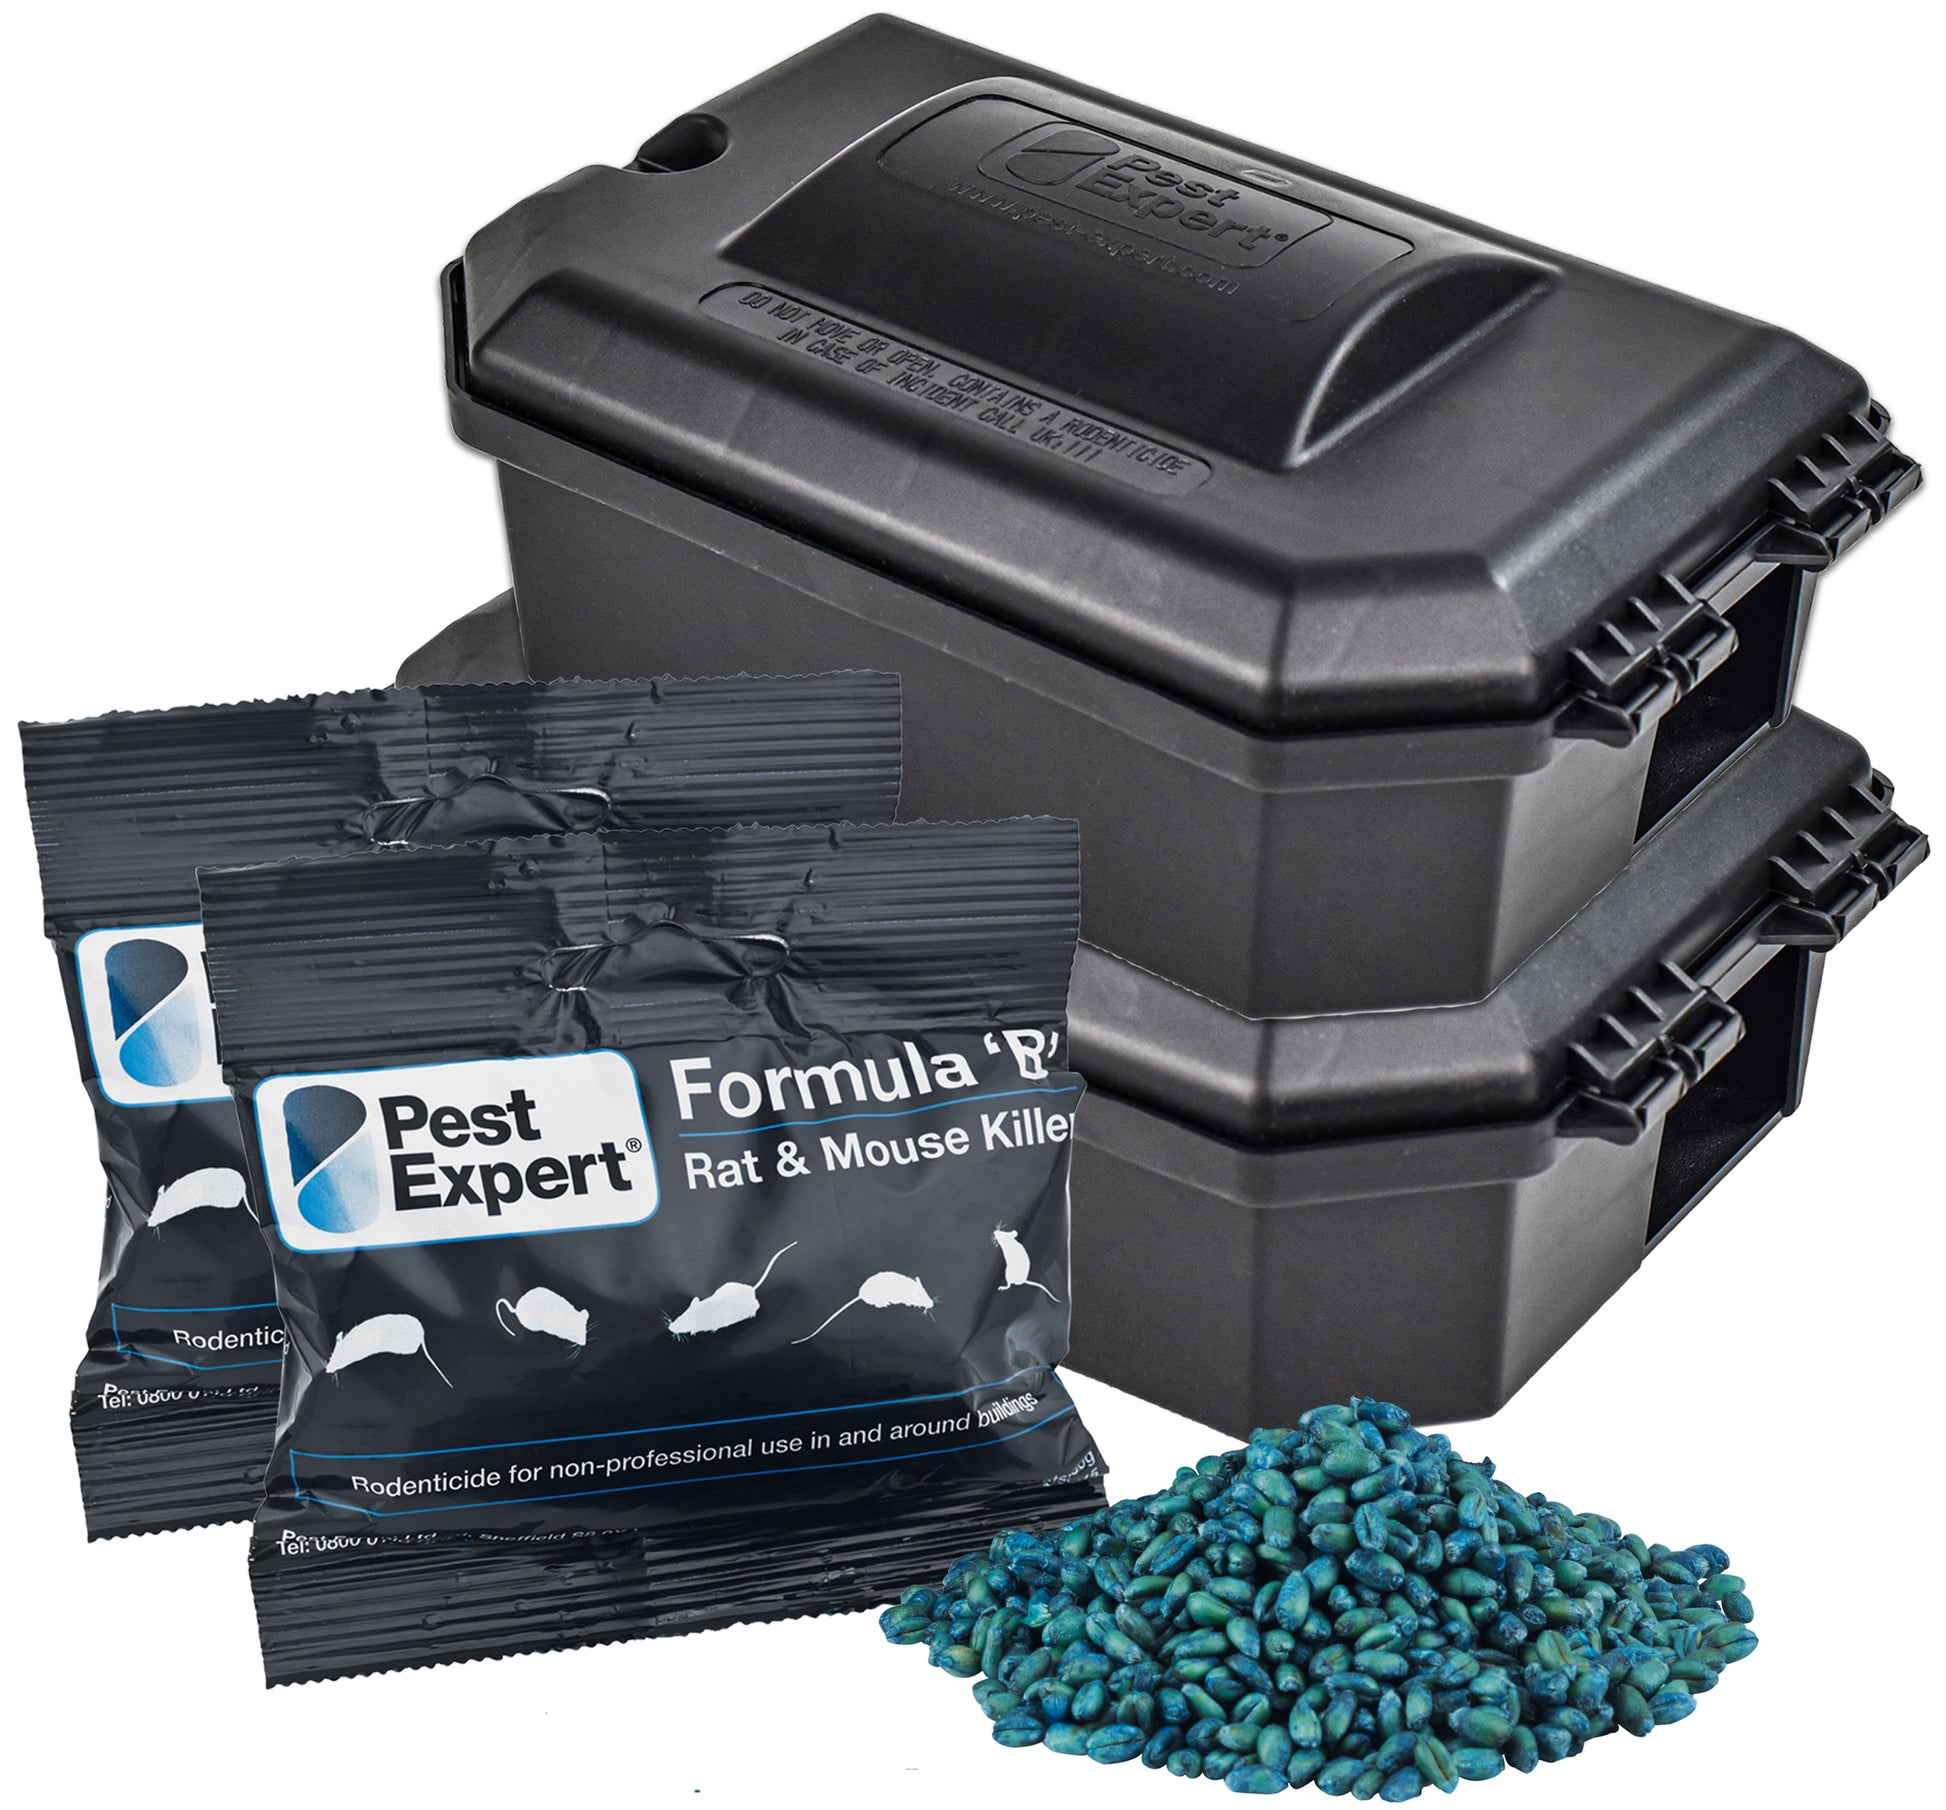 Rat Glue Traps (Pest Expert) 24 Pack – pestcontrolsupermarket